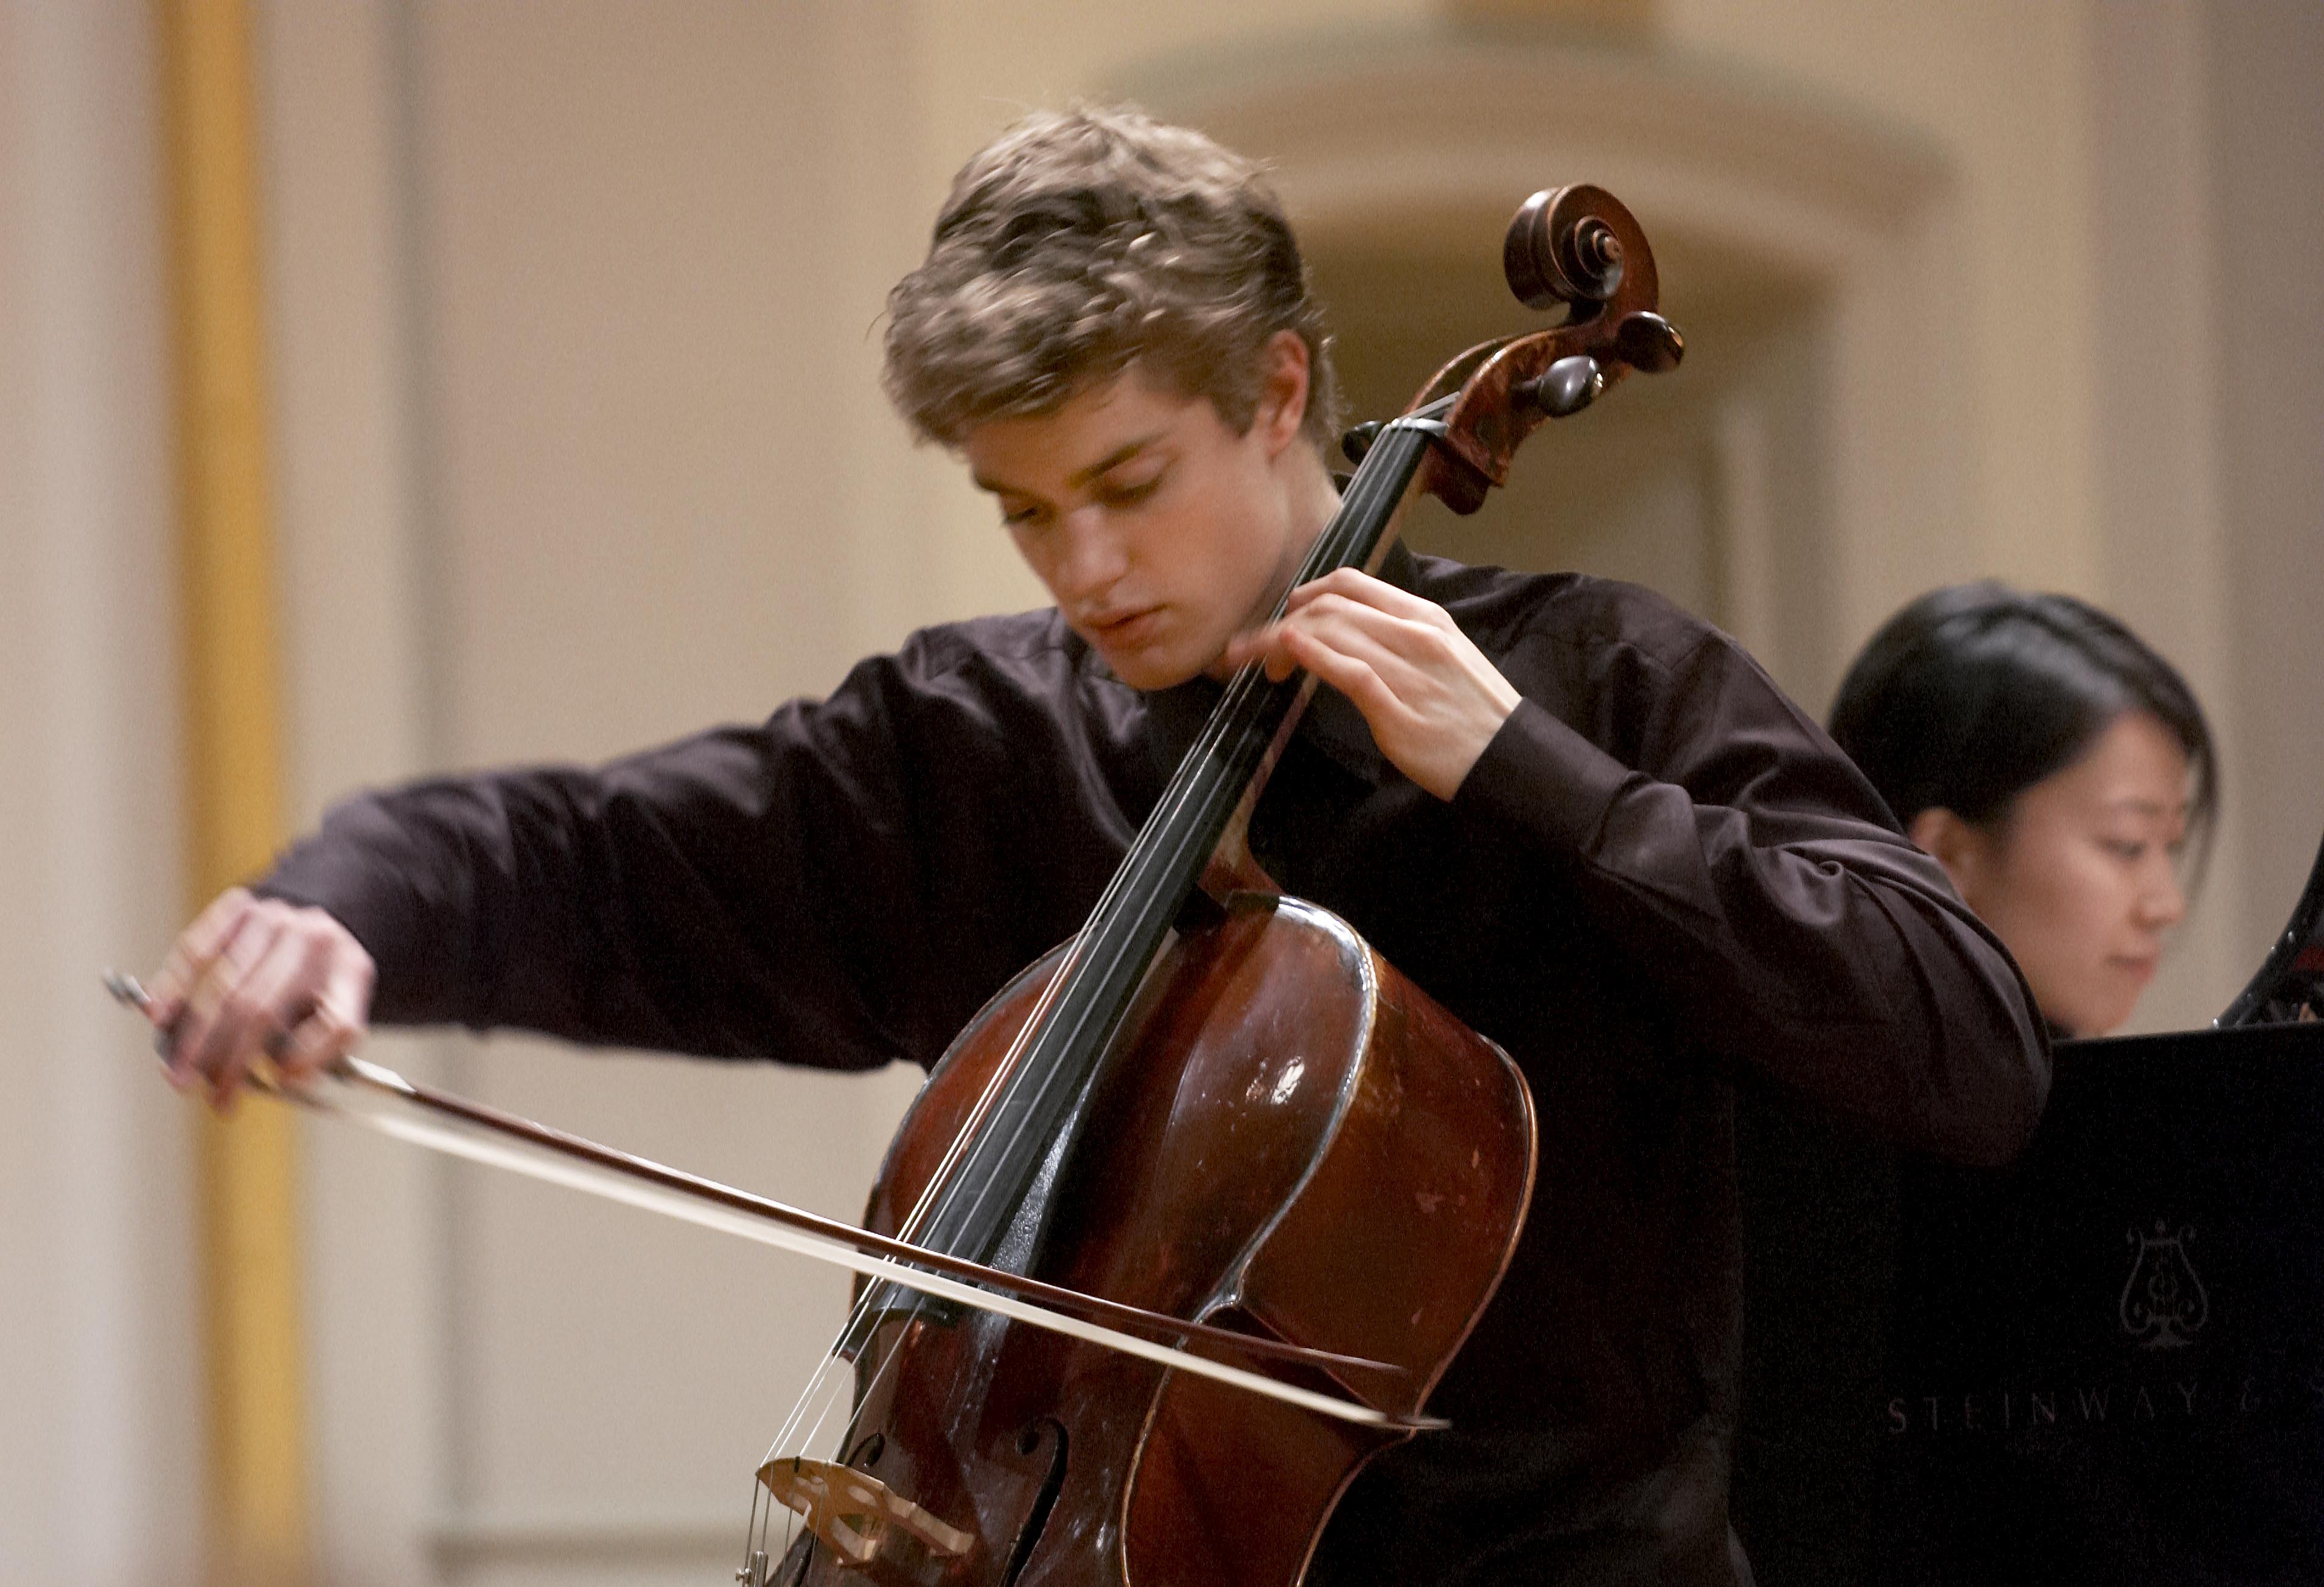 Rahn Musikpreis 2006, Lionel Cottet, 1. prize violoncello